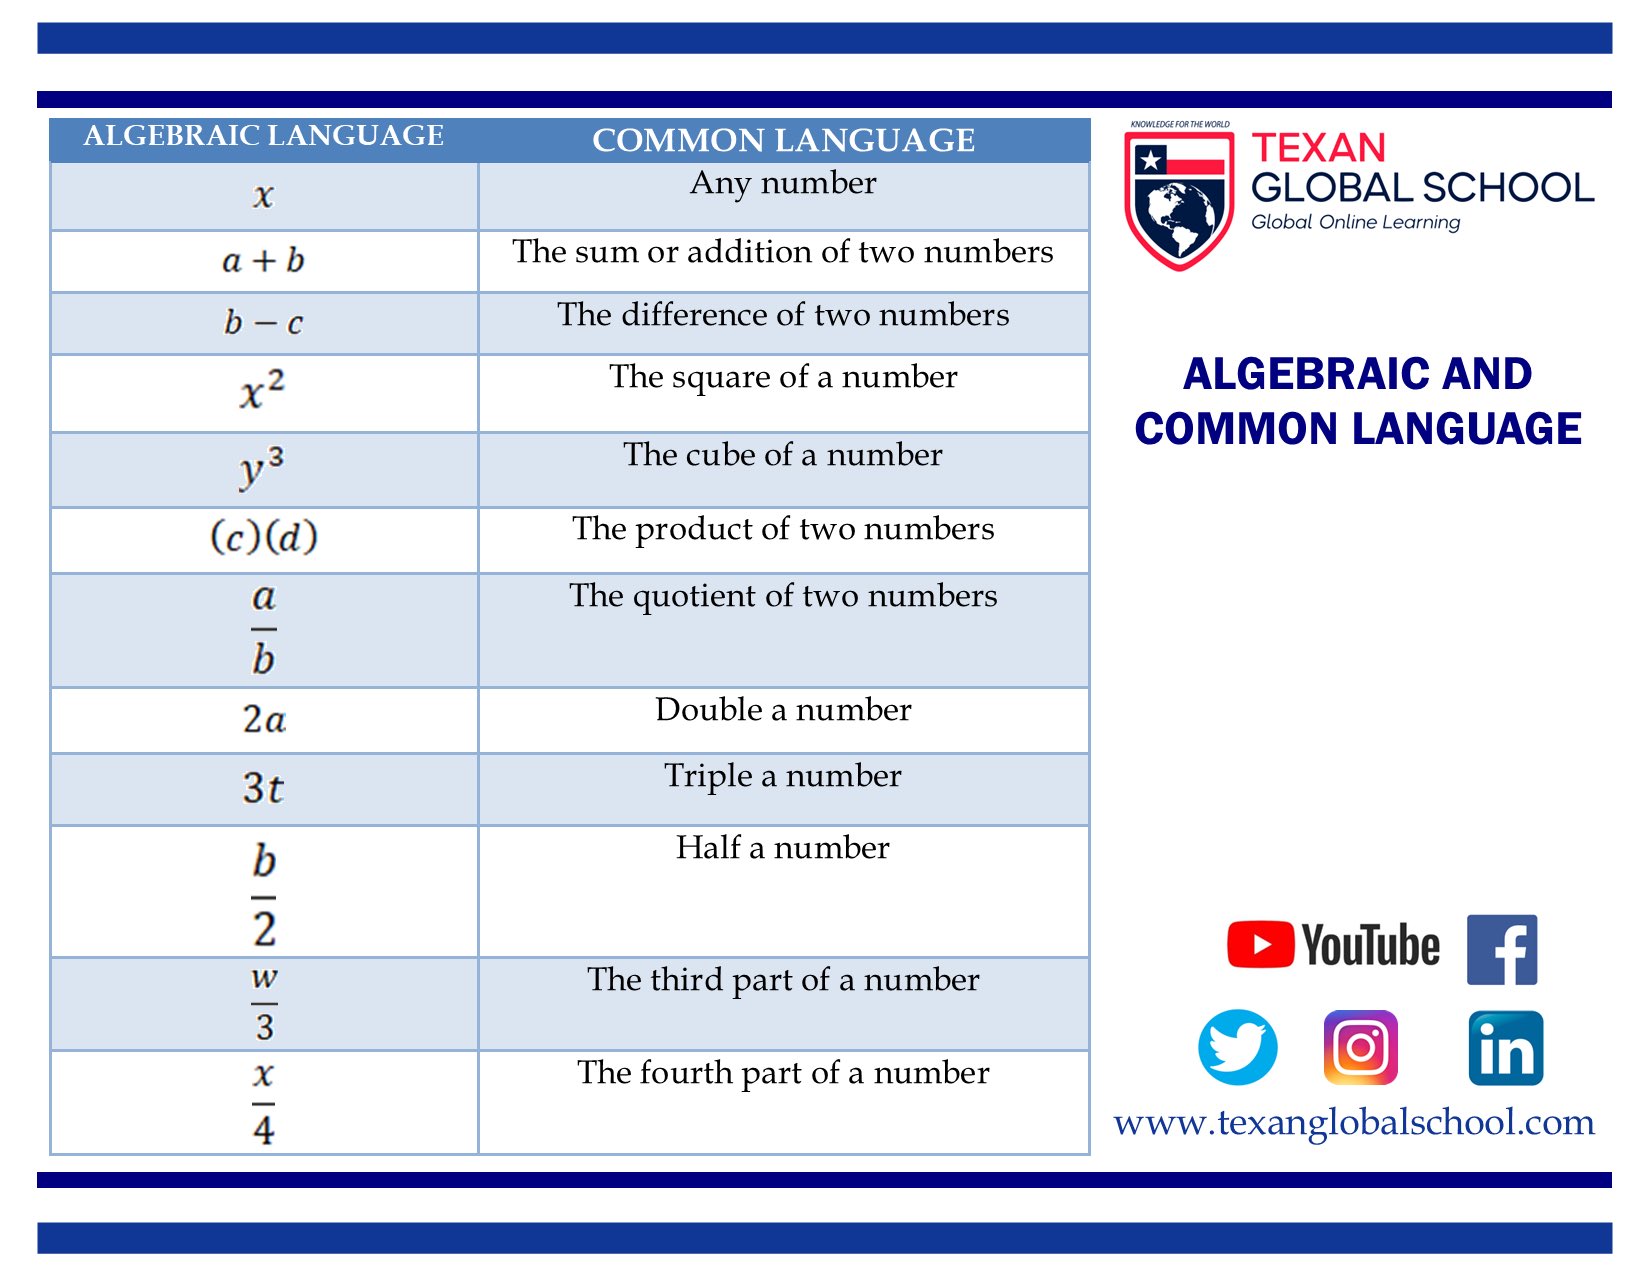 Algebraic and Common Language 2